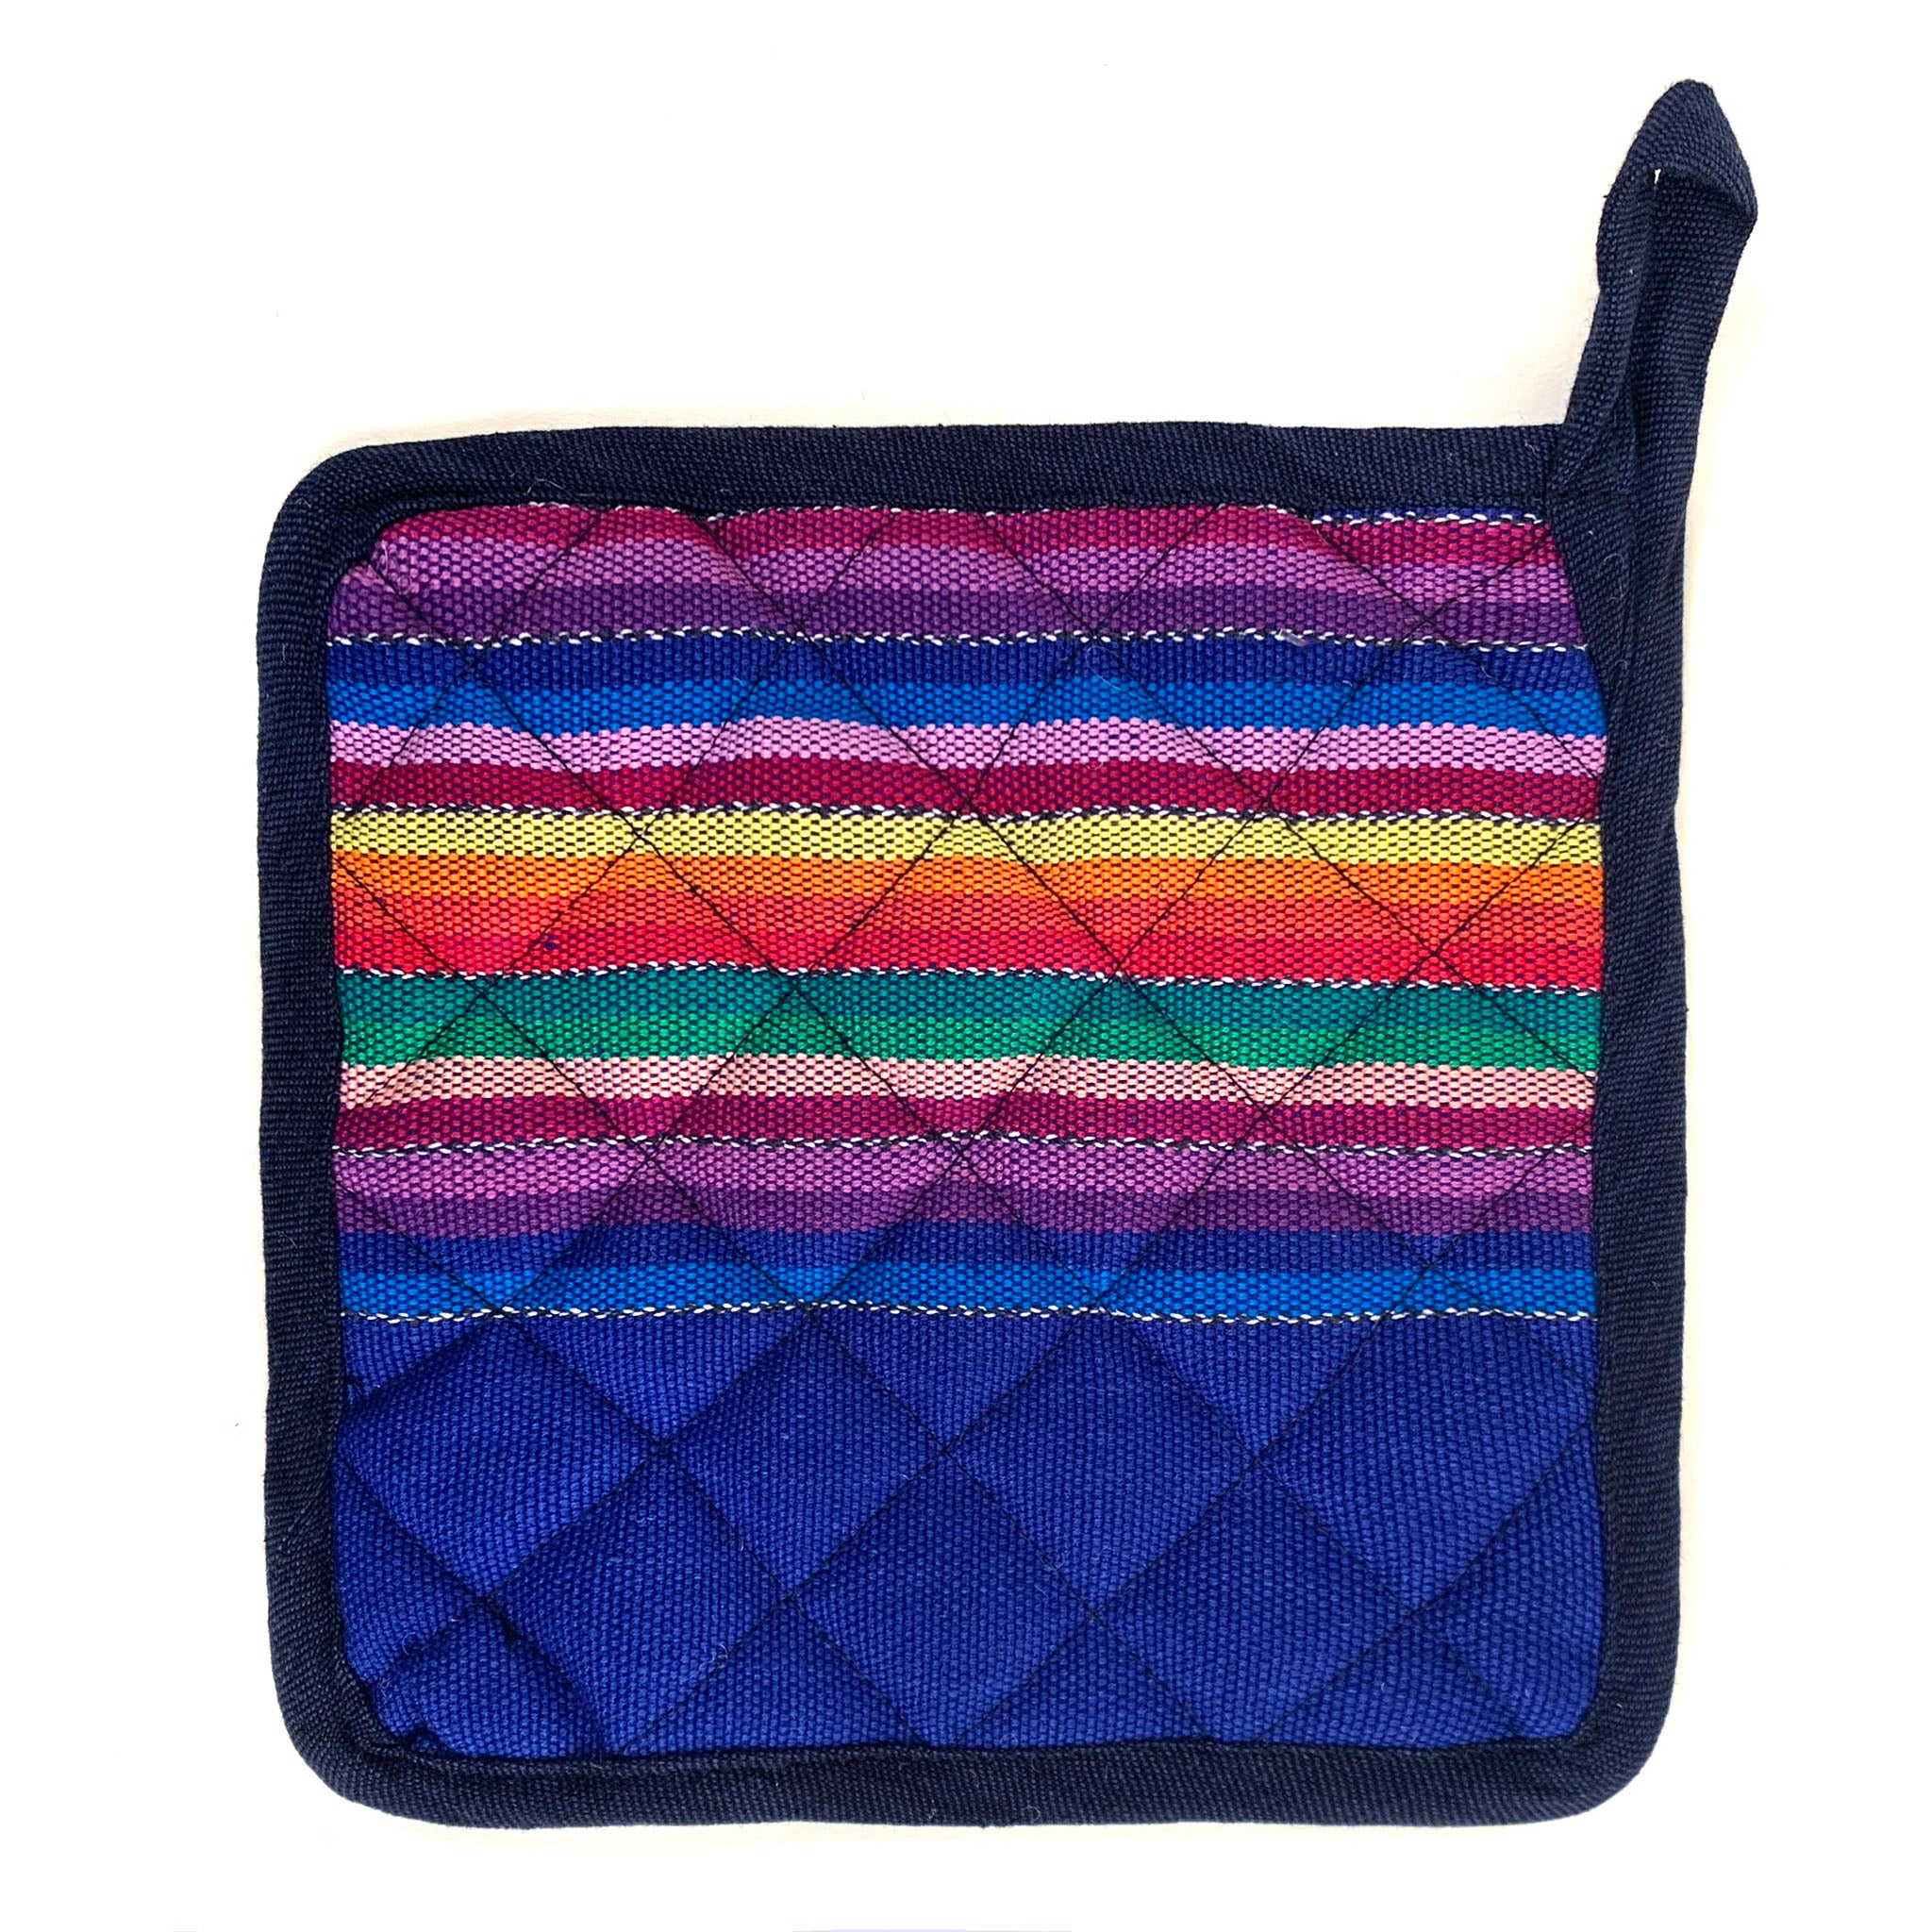 Hand woven Potholder Gift Set Caramel Stripes Fair Trade Mayamam